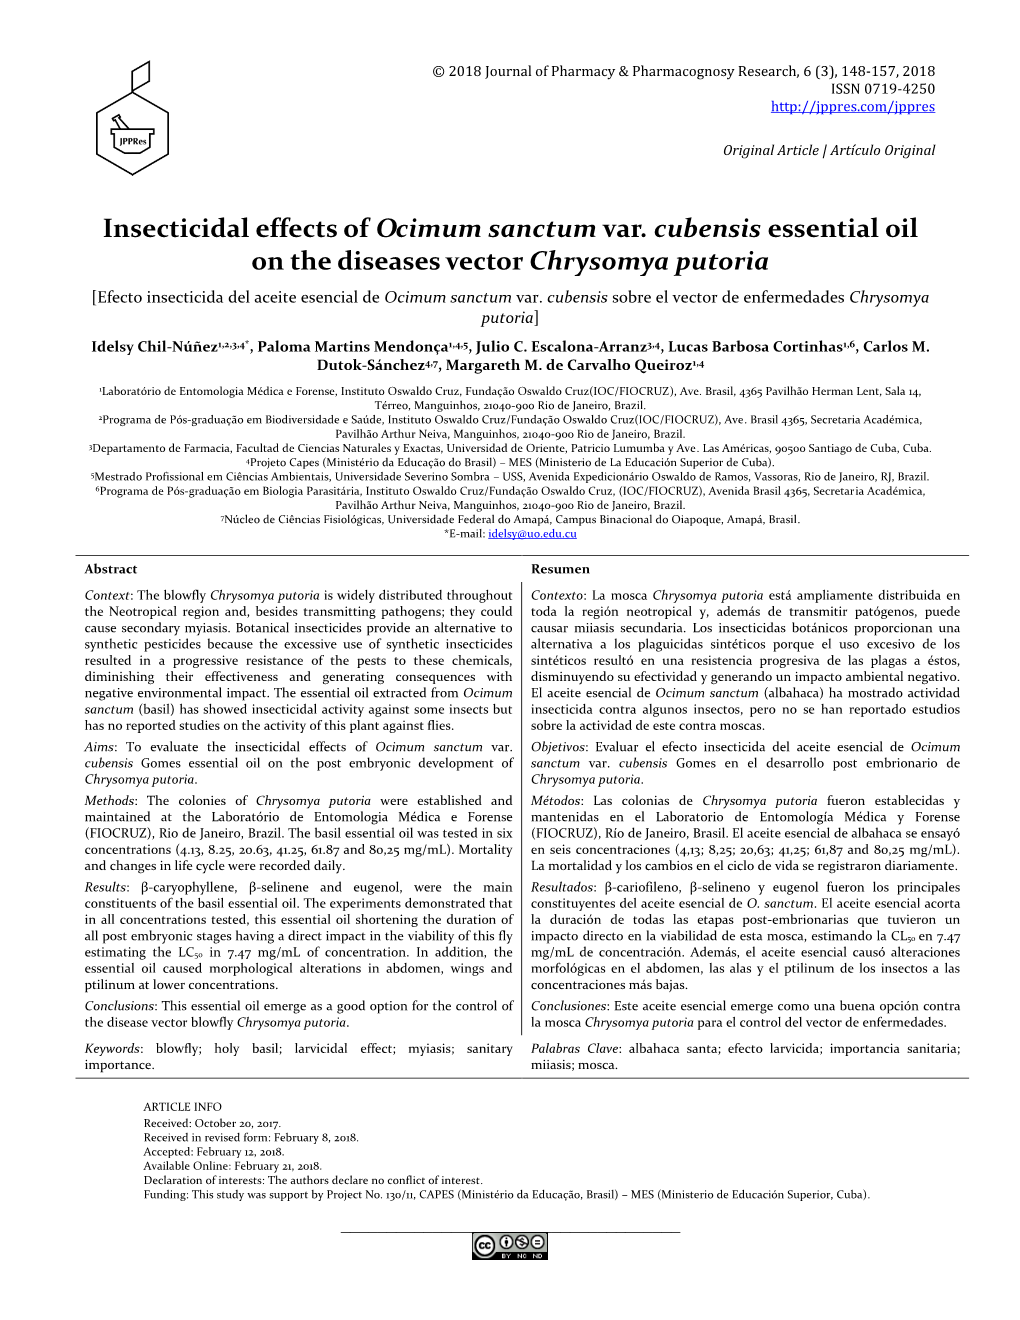 Insecticidal Effects of Ocimum Sanctum on Chrysomya Putoria